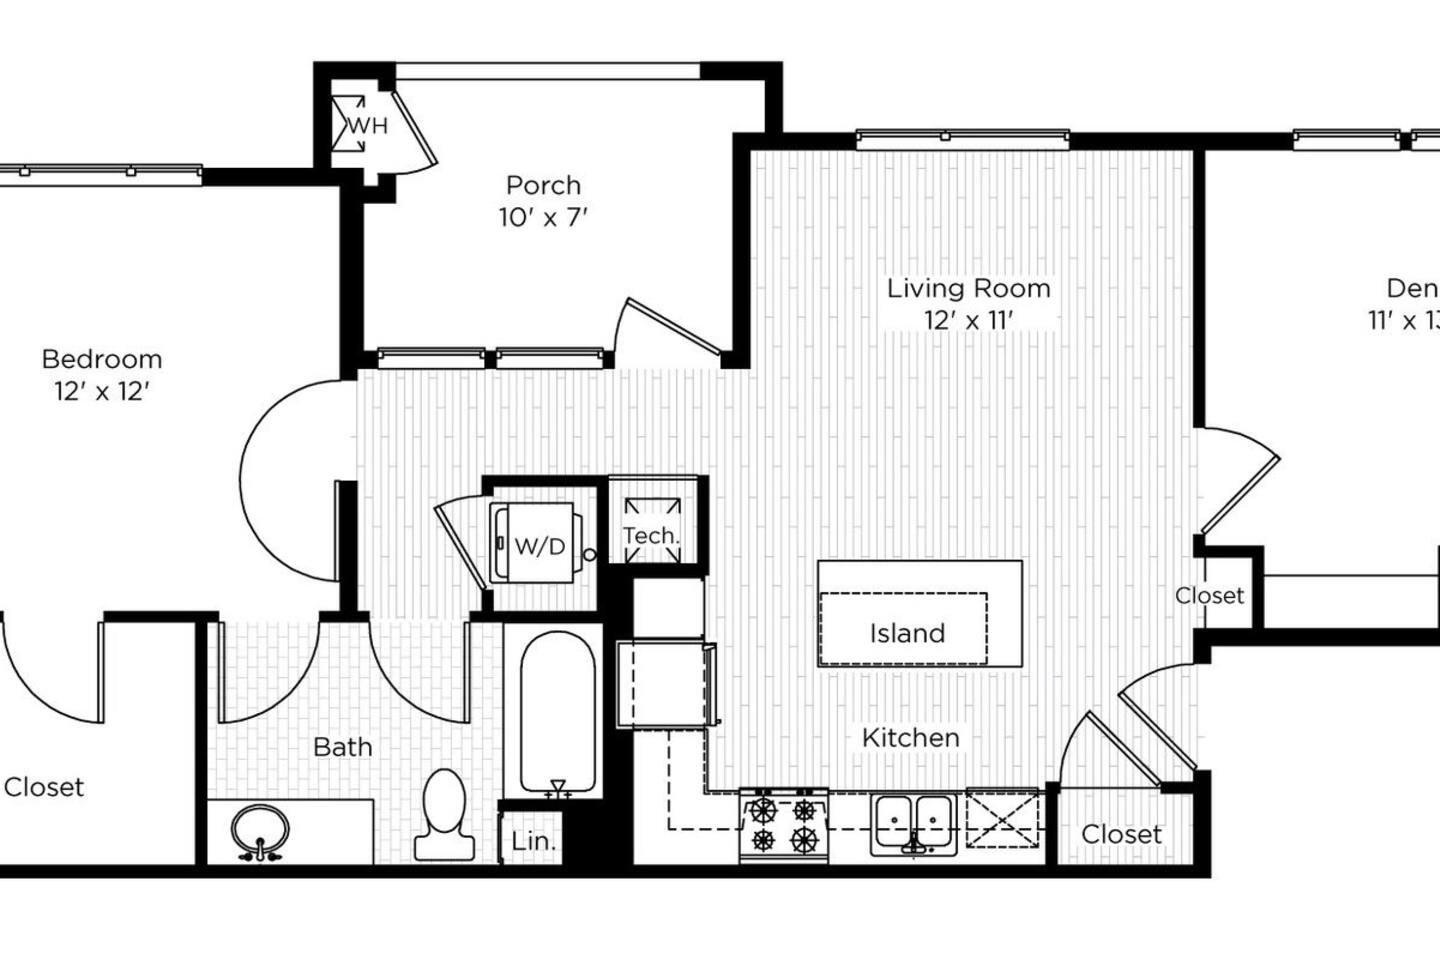 Floorplan diagram for 1EA, showing 1 bedroom